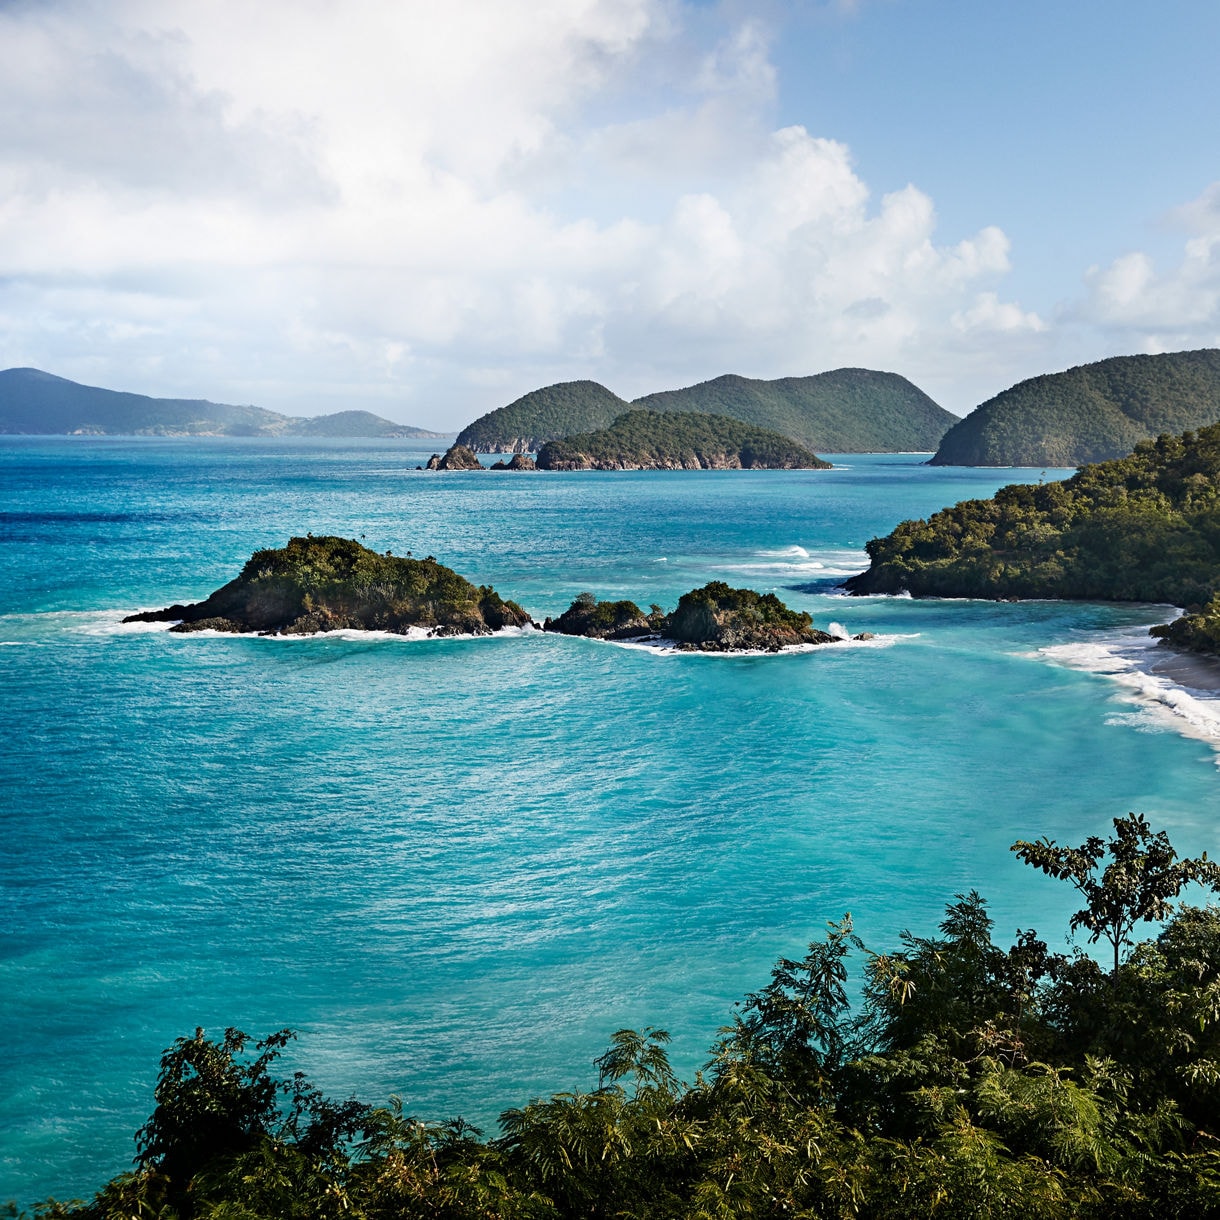 Eastern Caribbean Cruises - Cruise to Bahamas, Virgin Islands